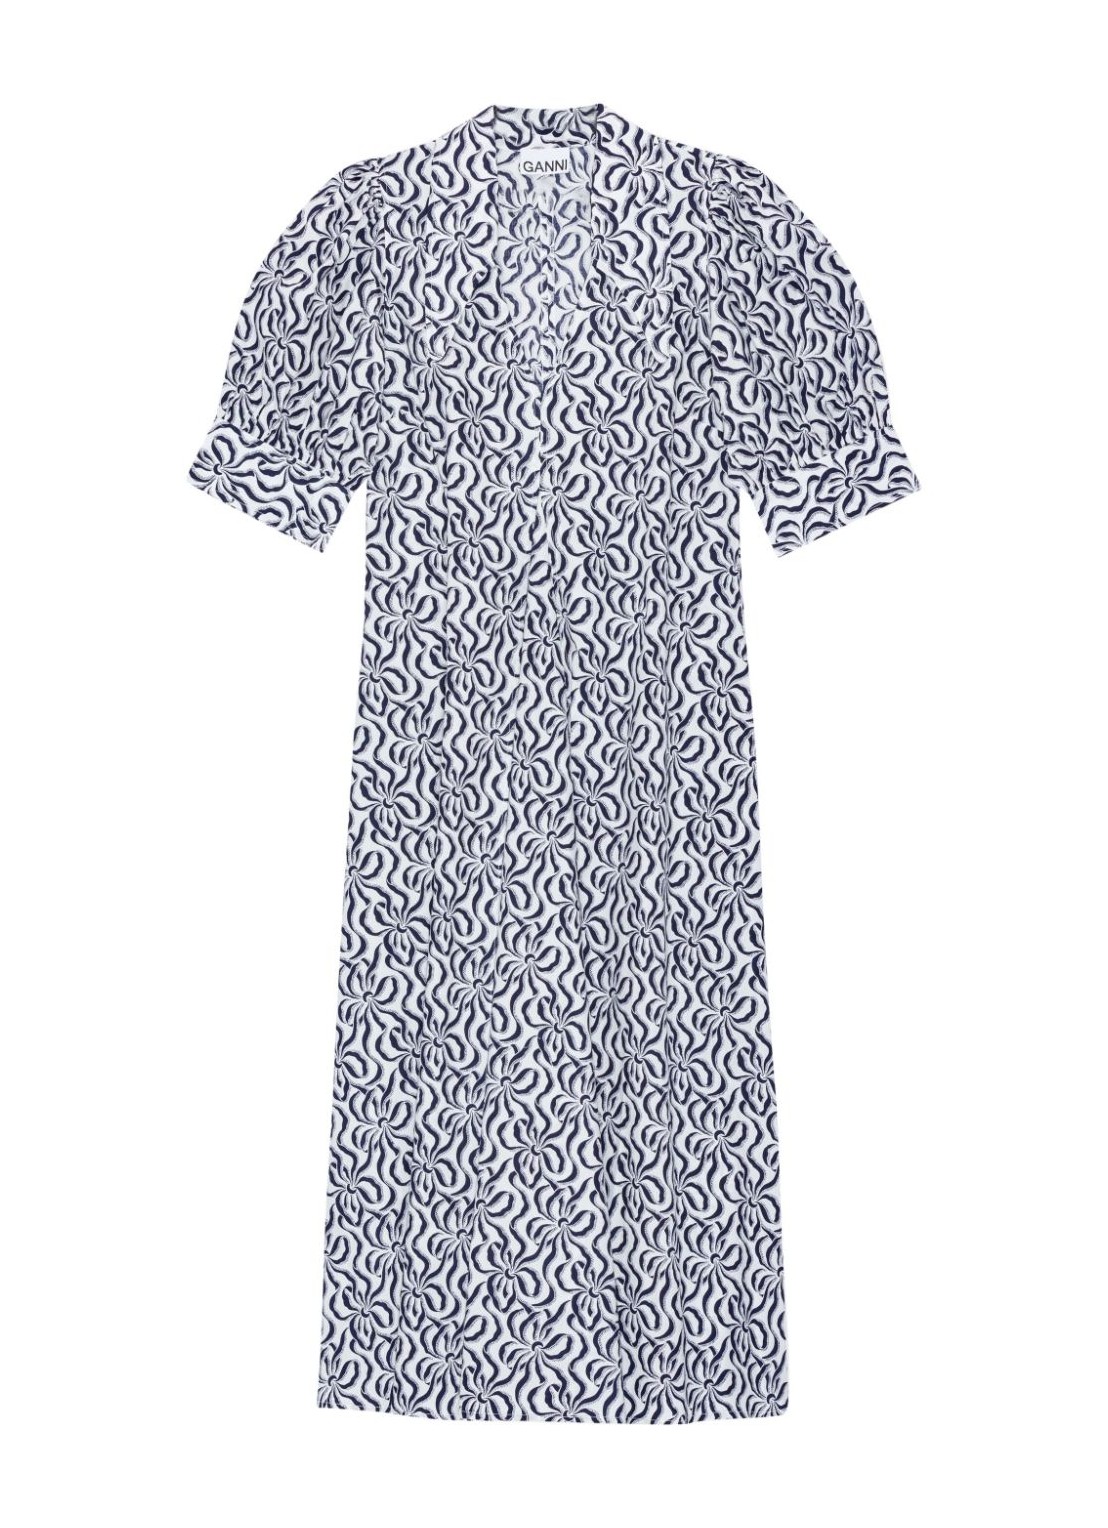 Vestido ganni dress woman printed cotton v-neck long dress f8857 135 talla 36
 